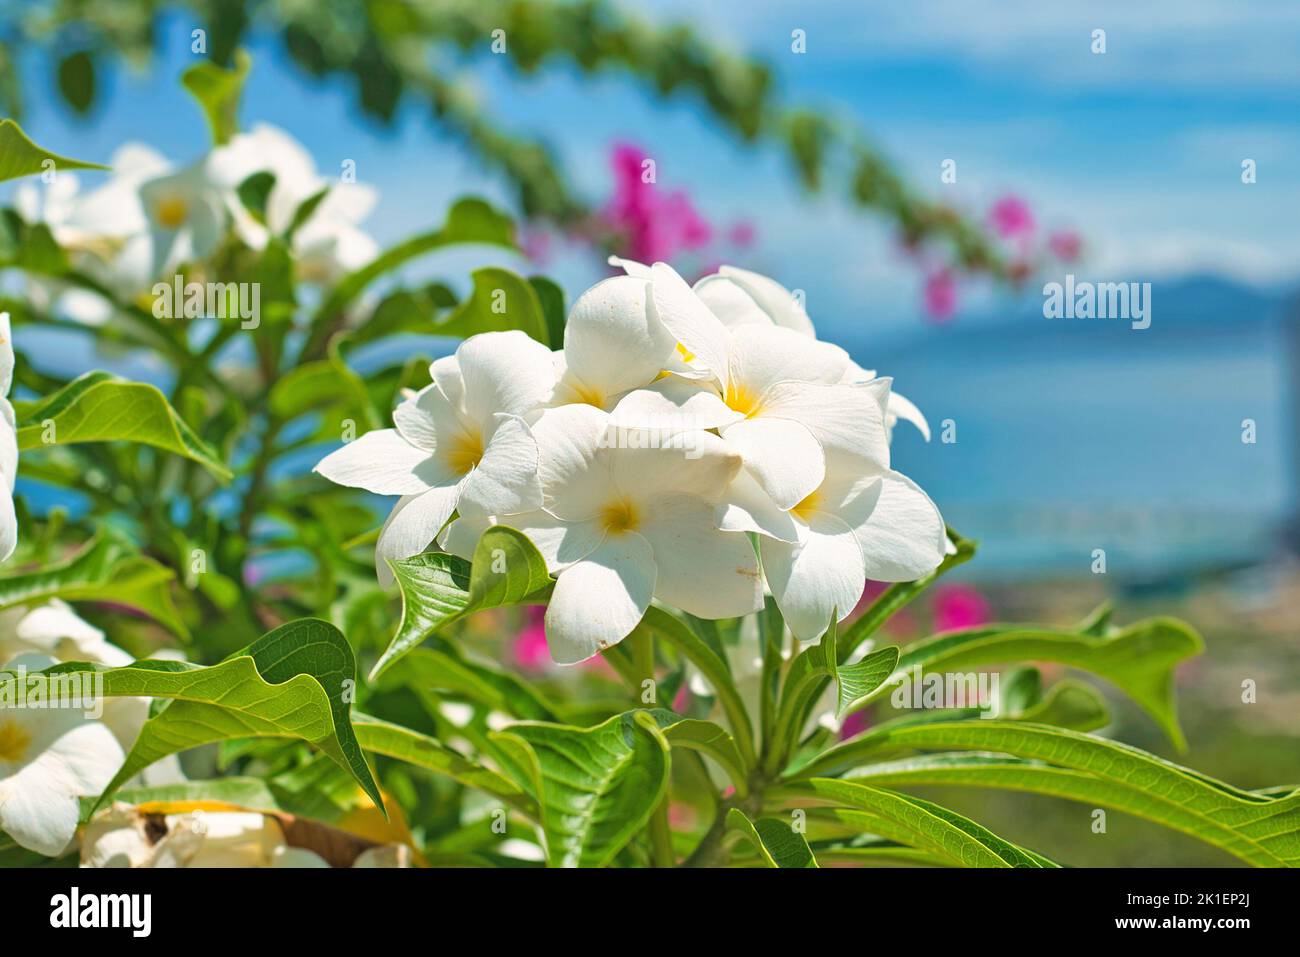 Many flowers of white plumeria against blue sky background Stock Photo